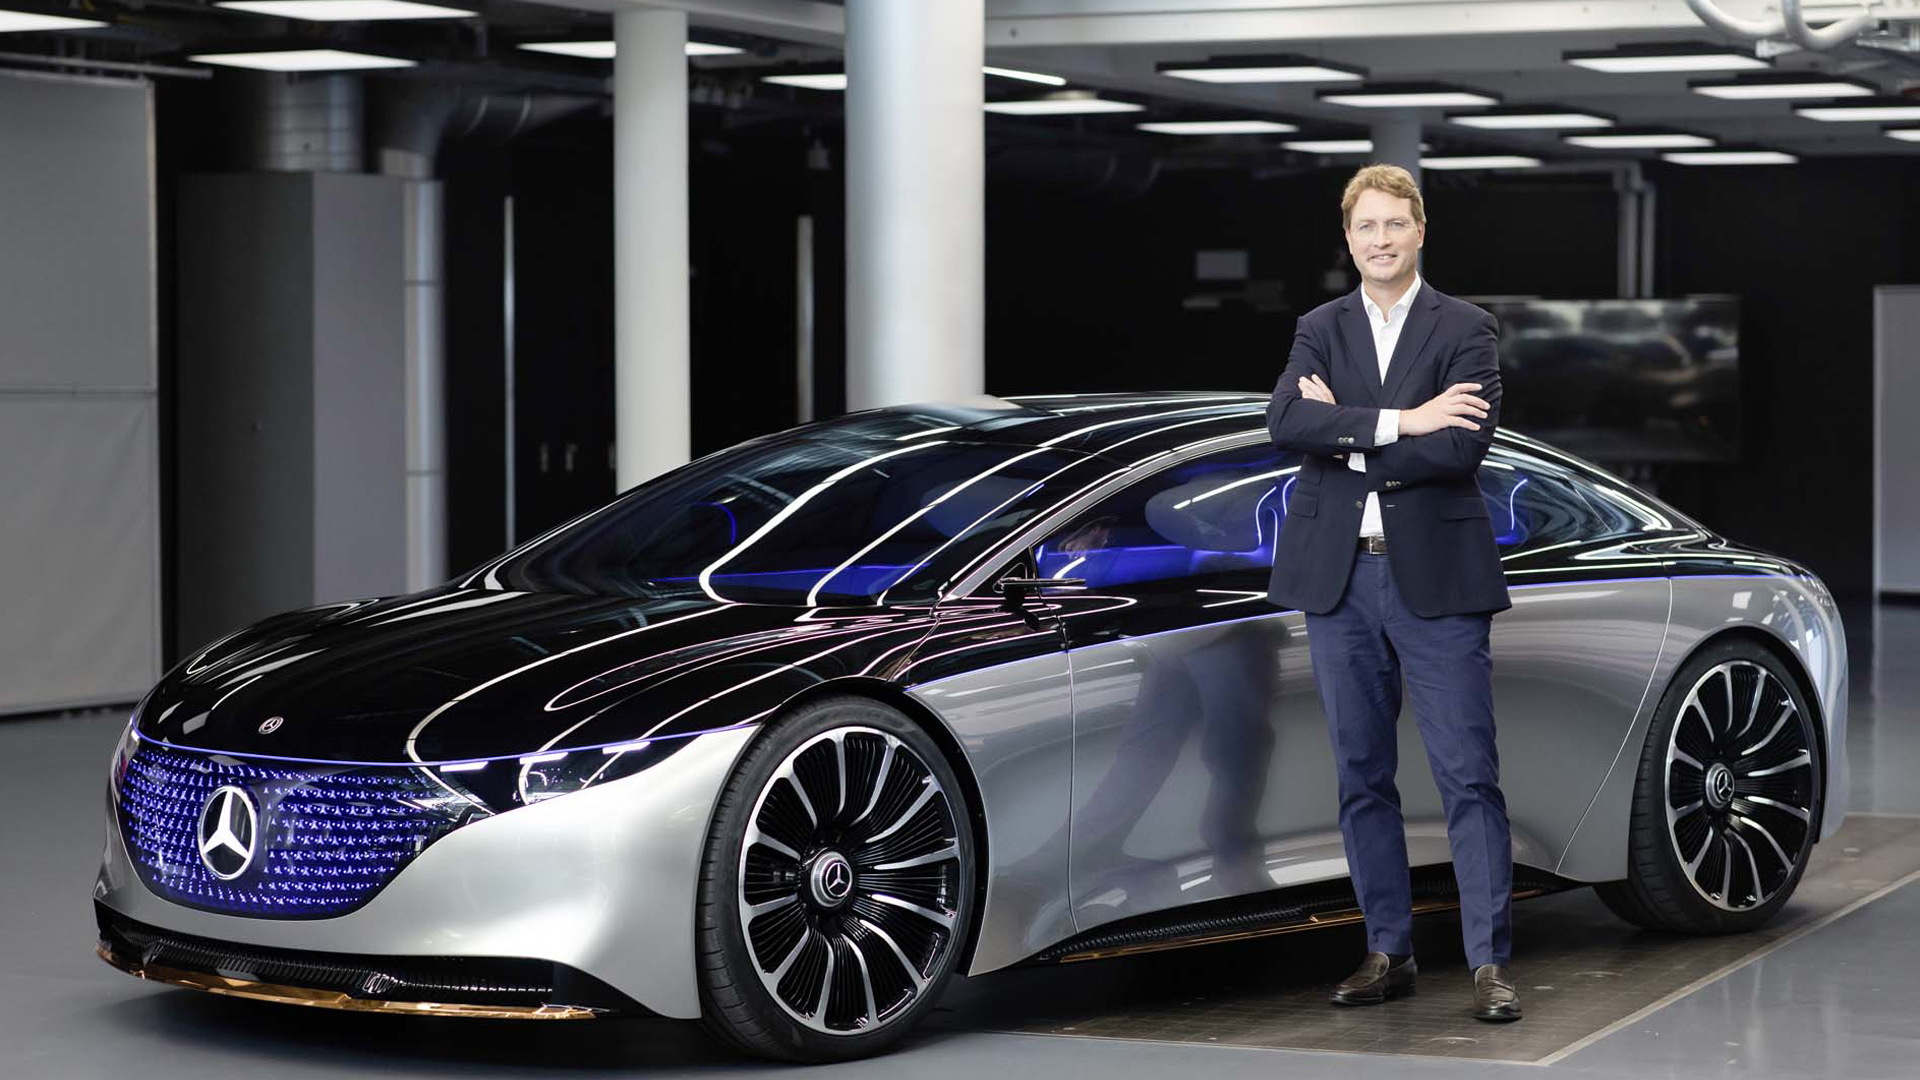 Ola Kaellenius with the Mercedes-Benz Vision EQS concept